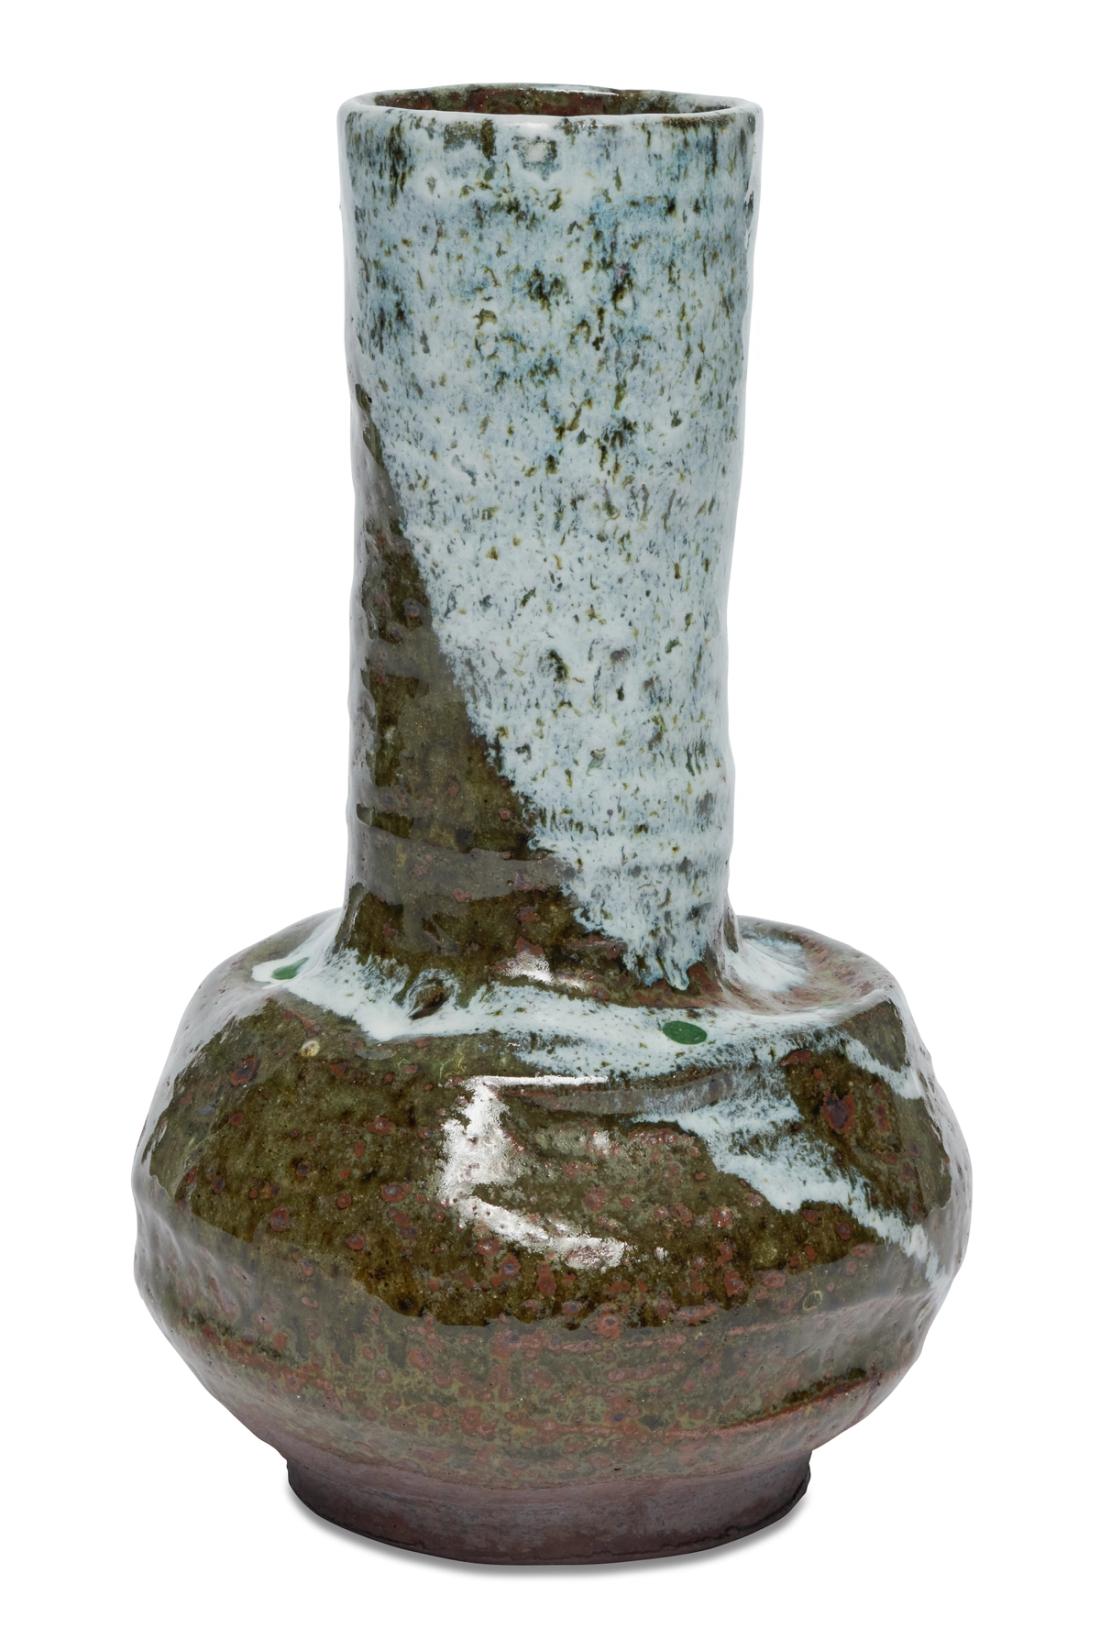 Lyson Marchessault, "Pangaea" Medium Vase, 2021